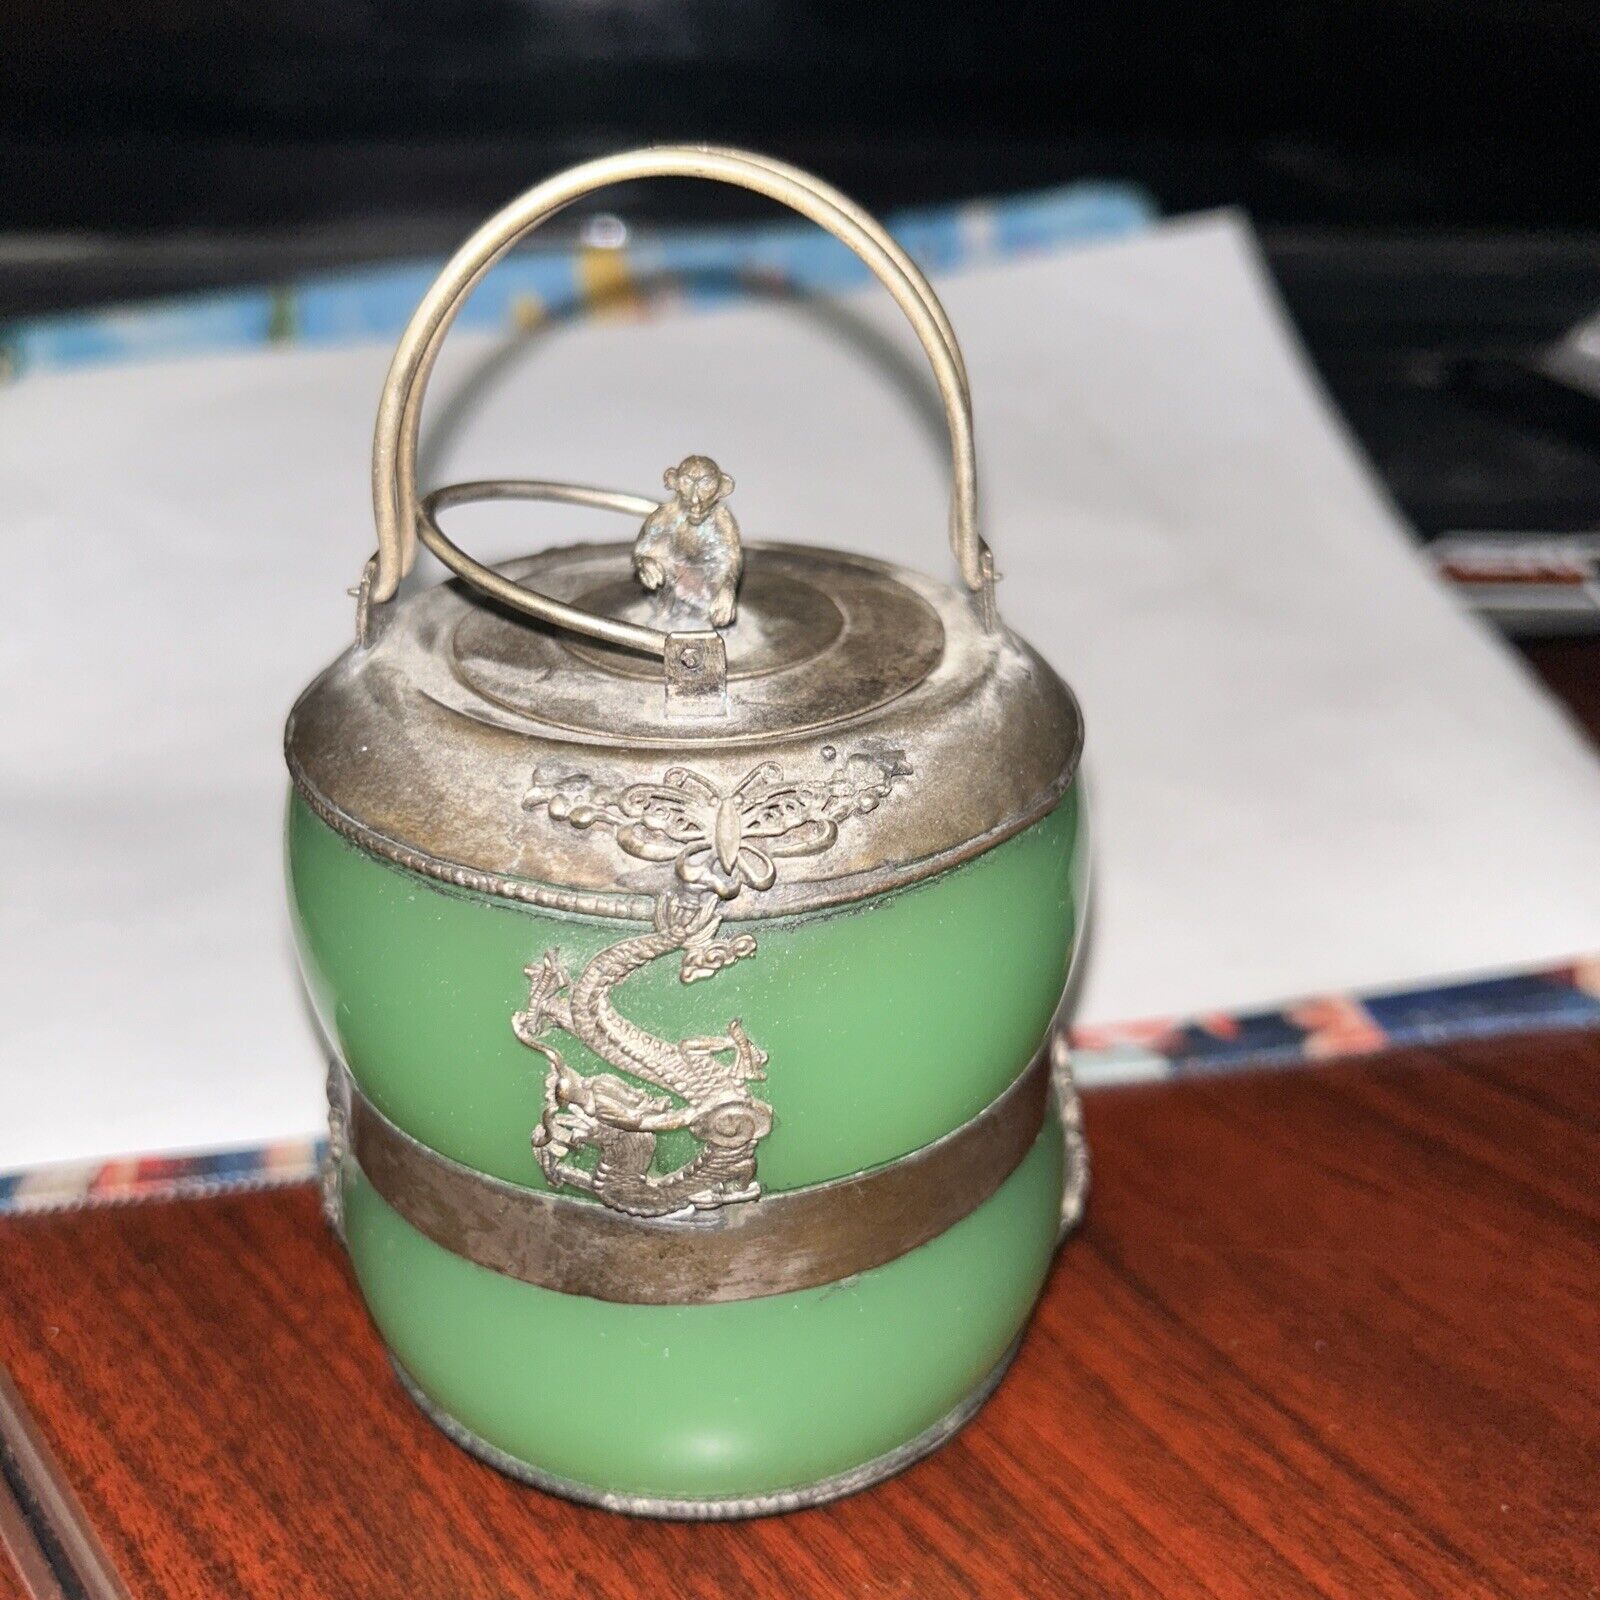 Hetian Antique Jade Tea Pot Chinese Hand crafted Circa 1920-30s Tibet